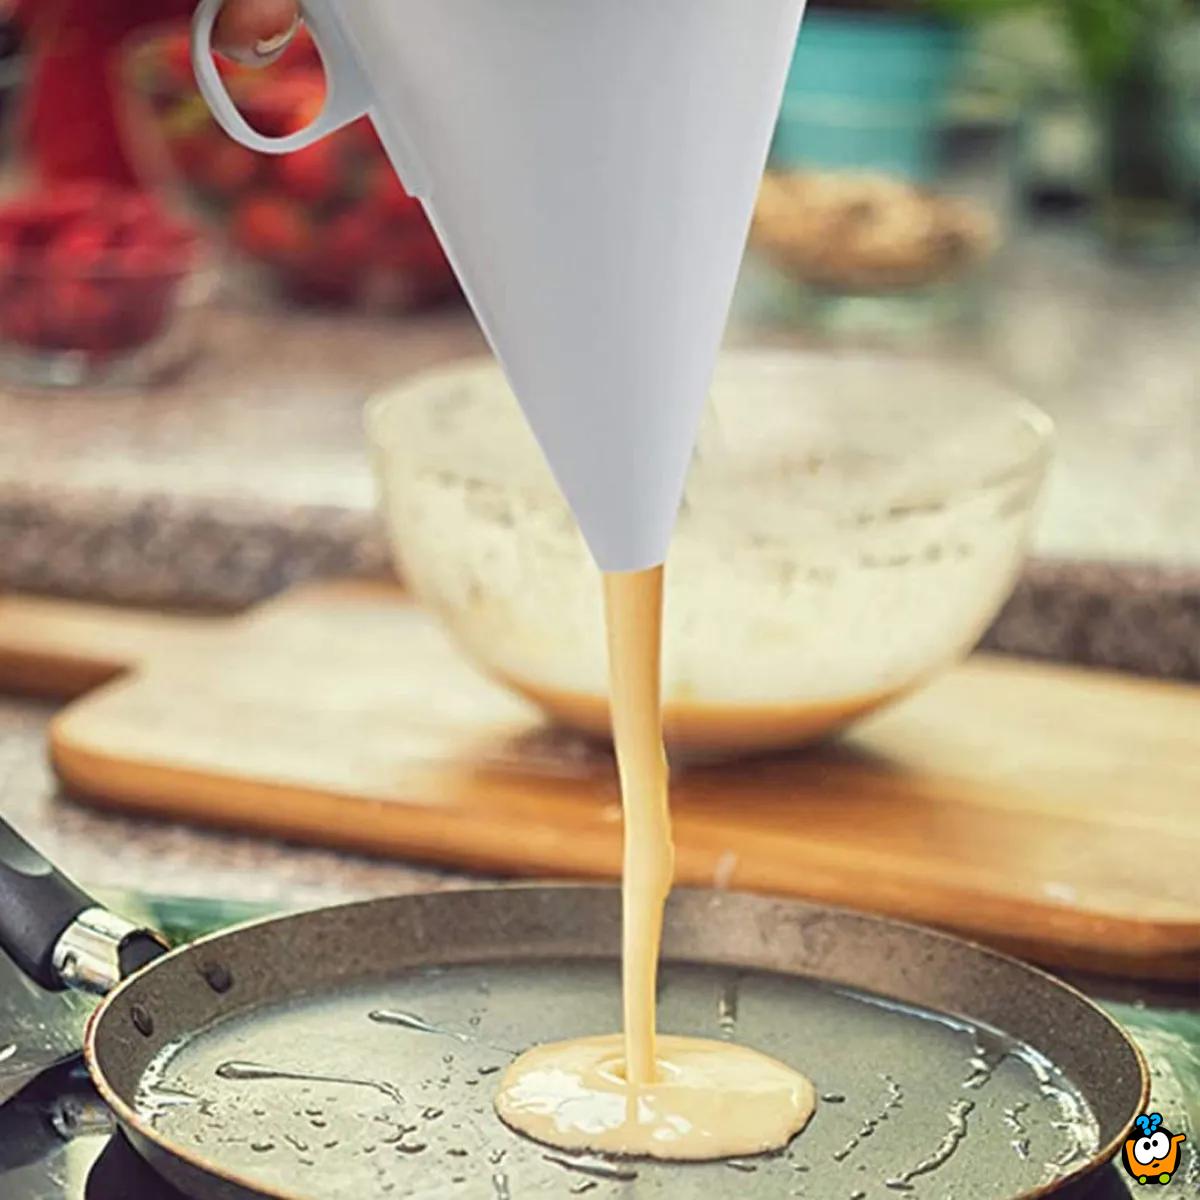 Cream Funnel - višenamenski levak za doziranje testa, brašna, šećera